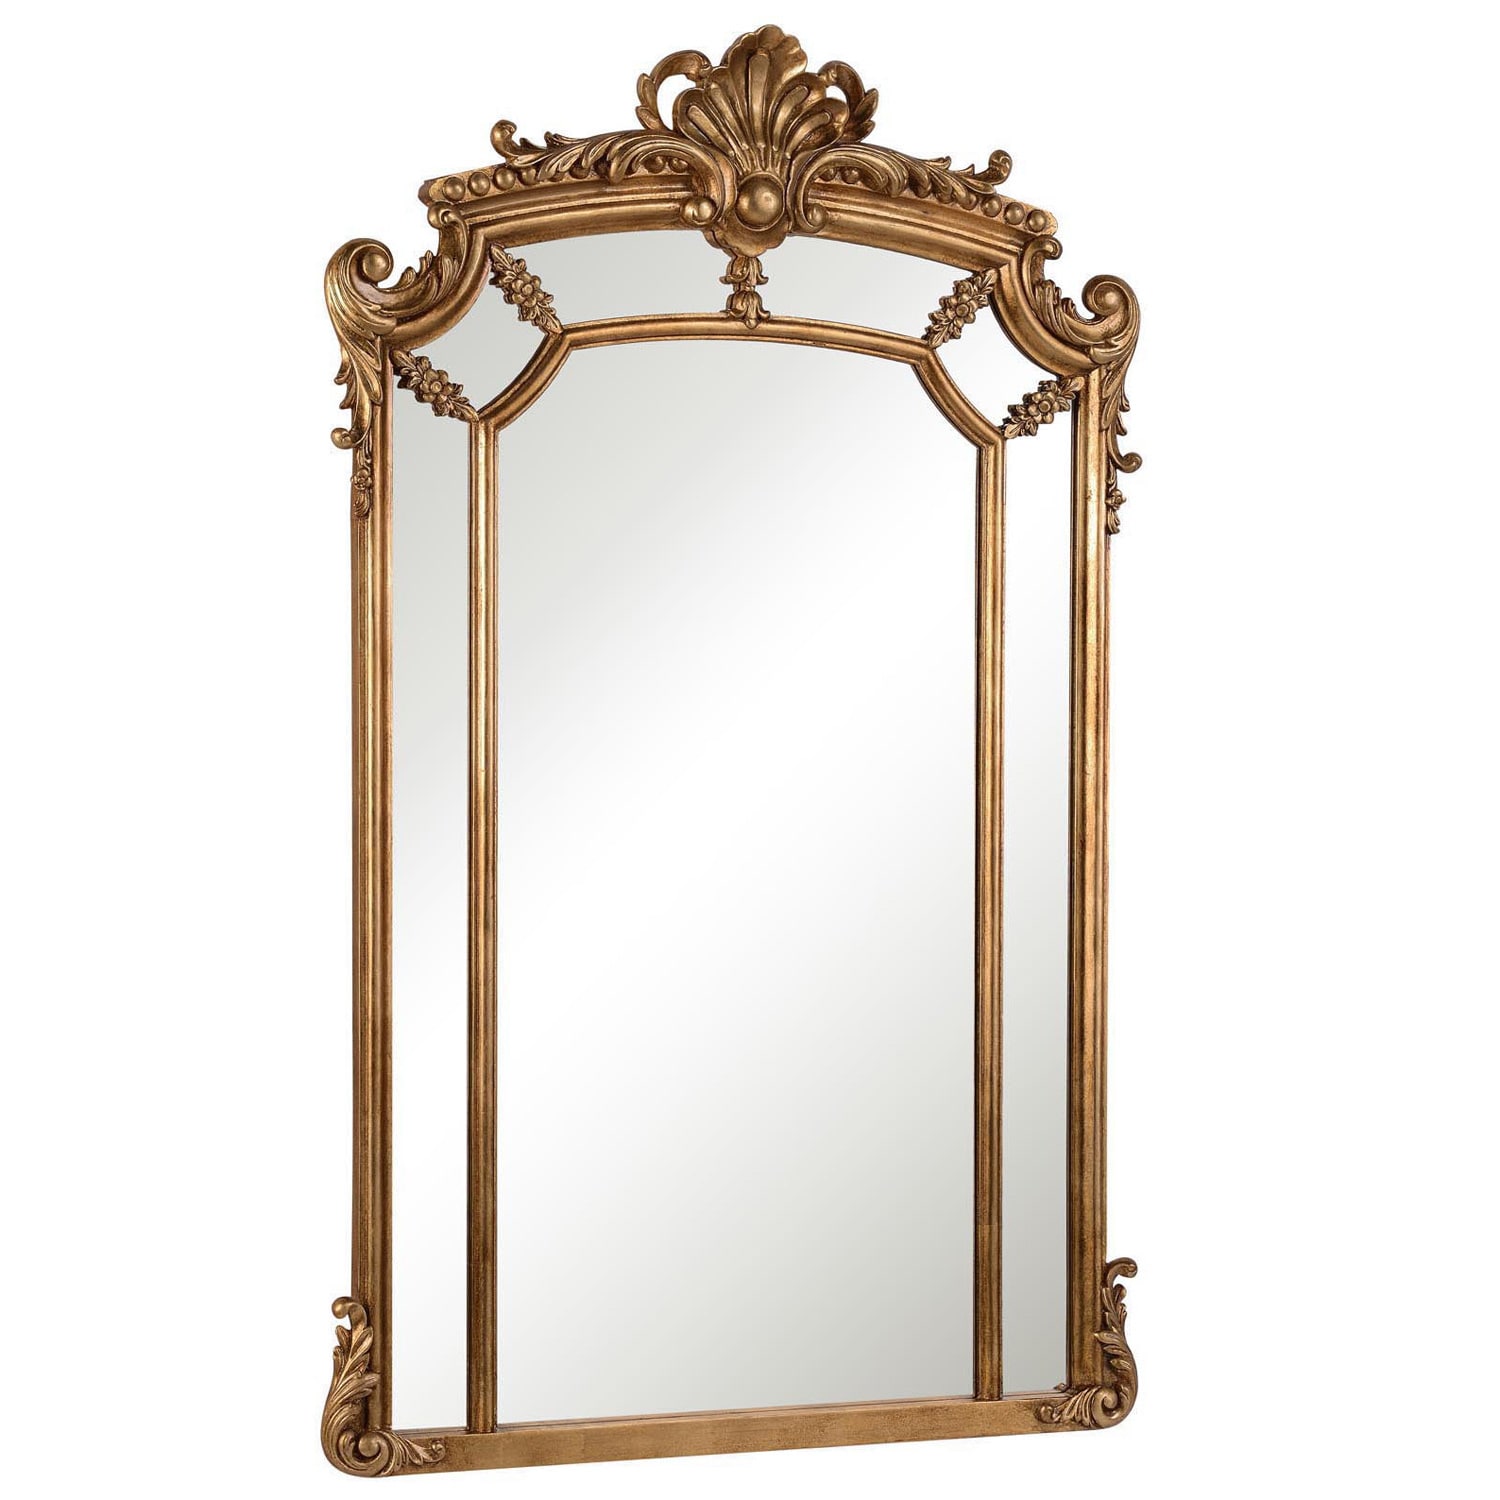 Christopher Knight Home Antique Goldtone Framed Mirror